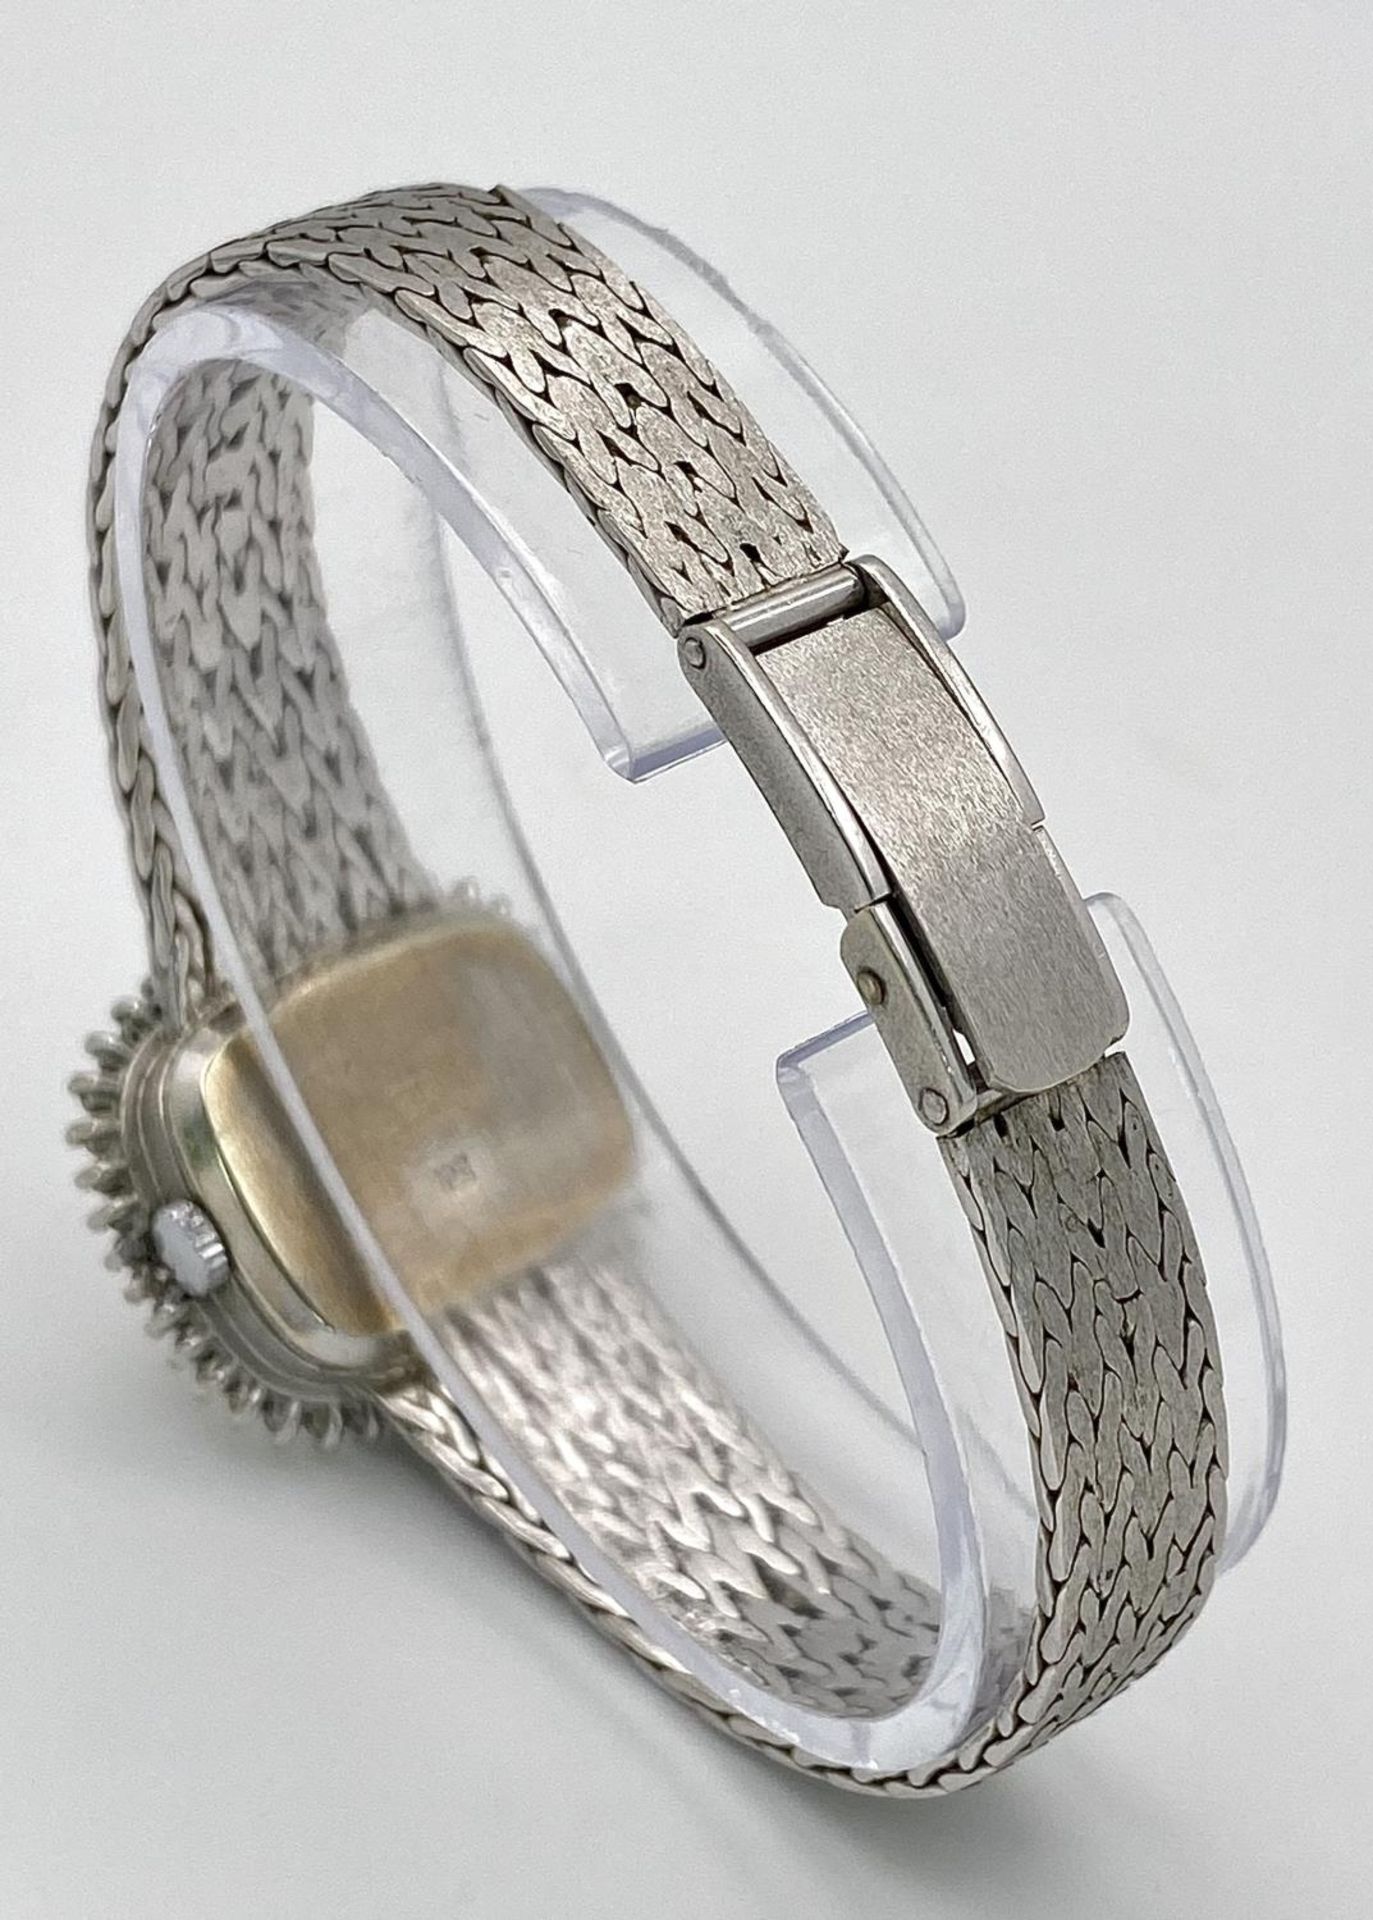 A Vintage Baylor 9K White Gold and Diamond Ladies Watch. 9k gold bracelet and case - 25mm. Diamond - Image 6 of 9